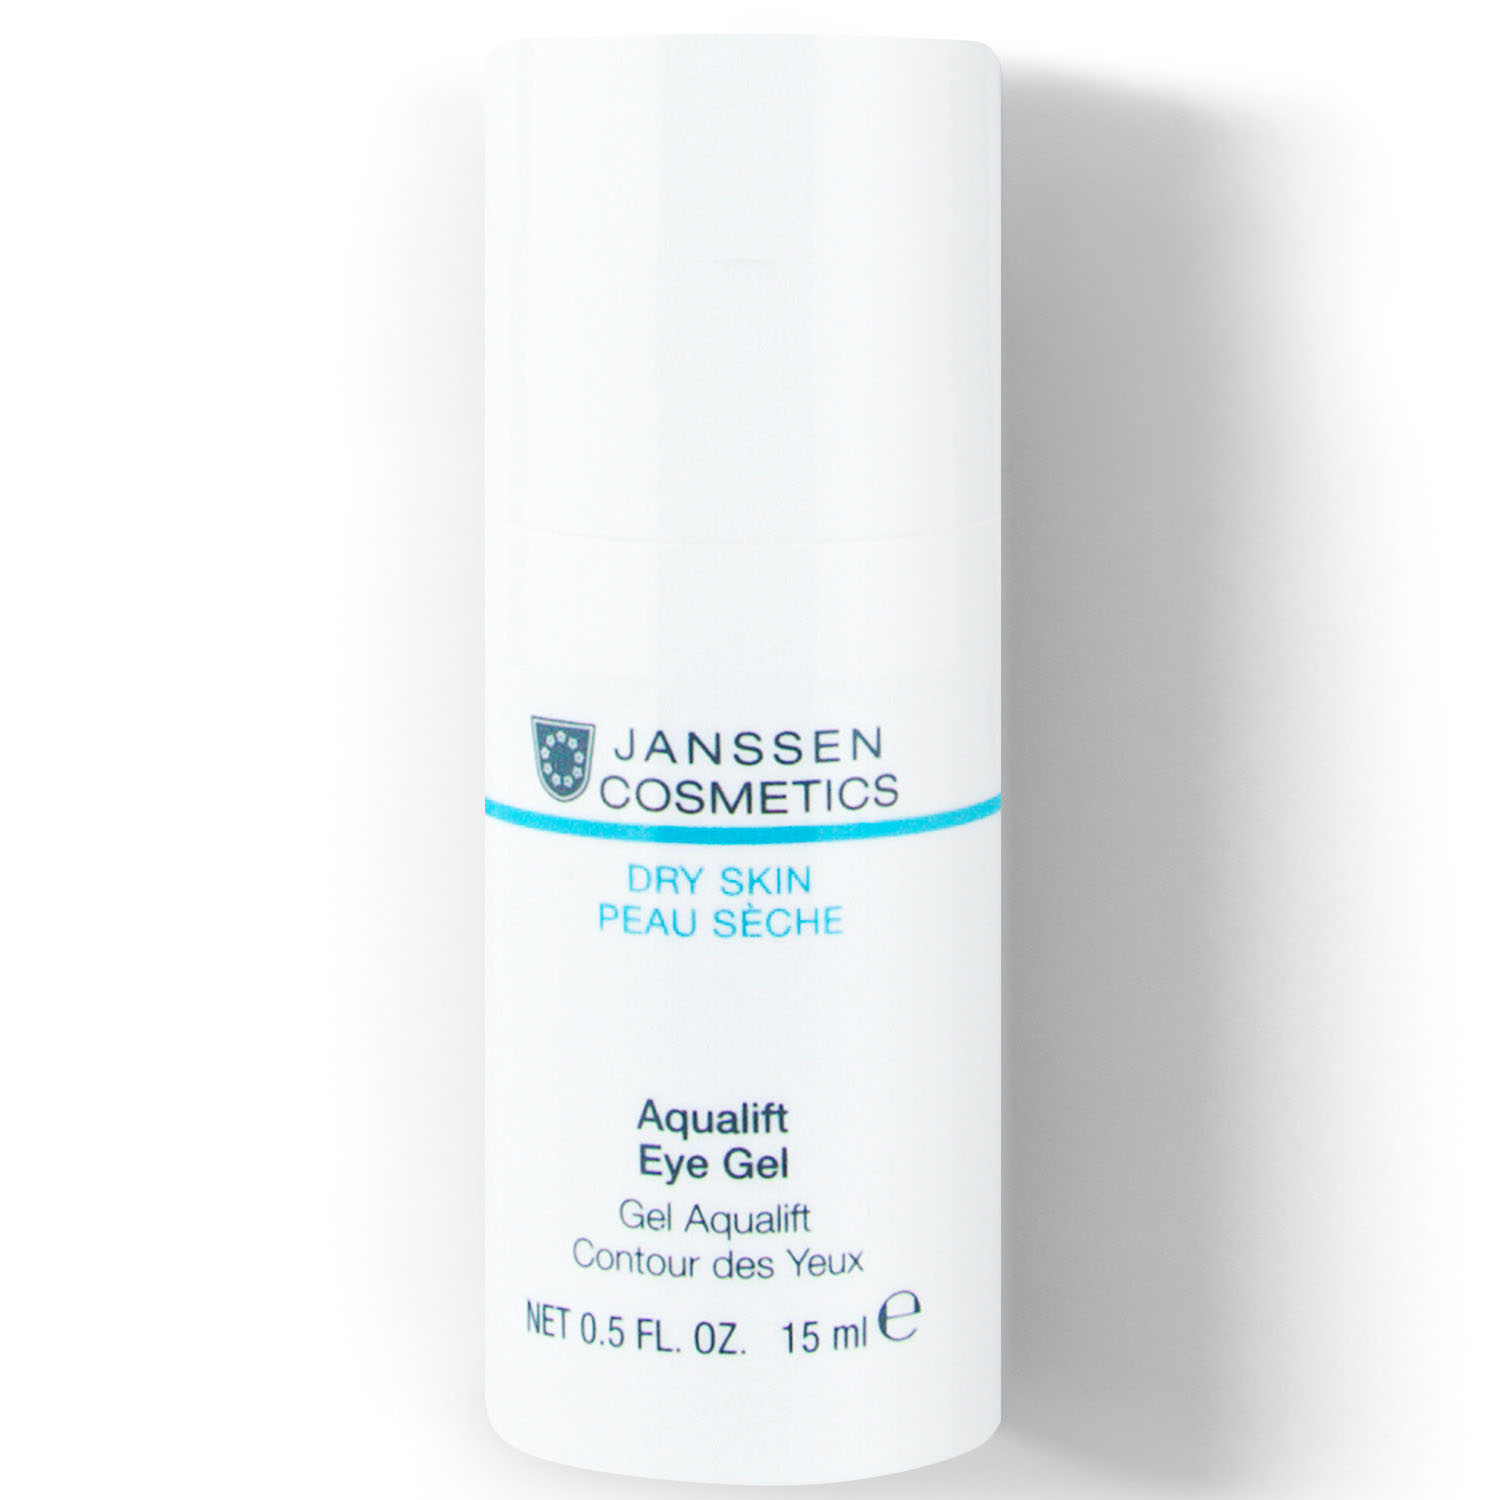 Janssen Cosmetics Ультраувлажняющий лифтинг-гель для контура глаз Aqualift Eye Gel, 15 мл (Janssen Cosmetics, Dry Skin)